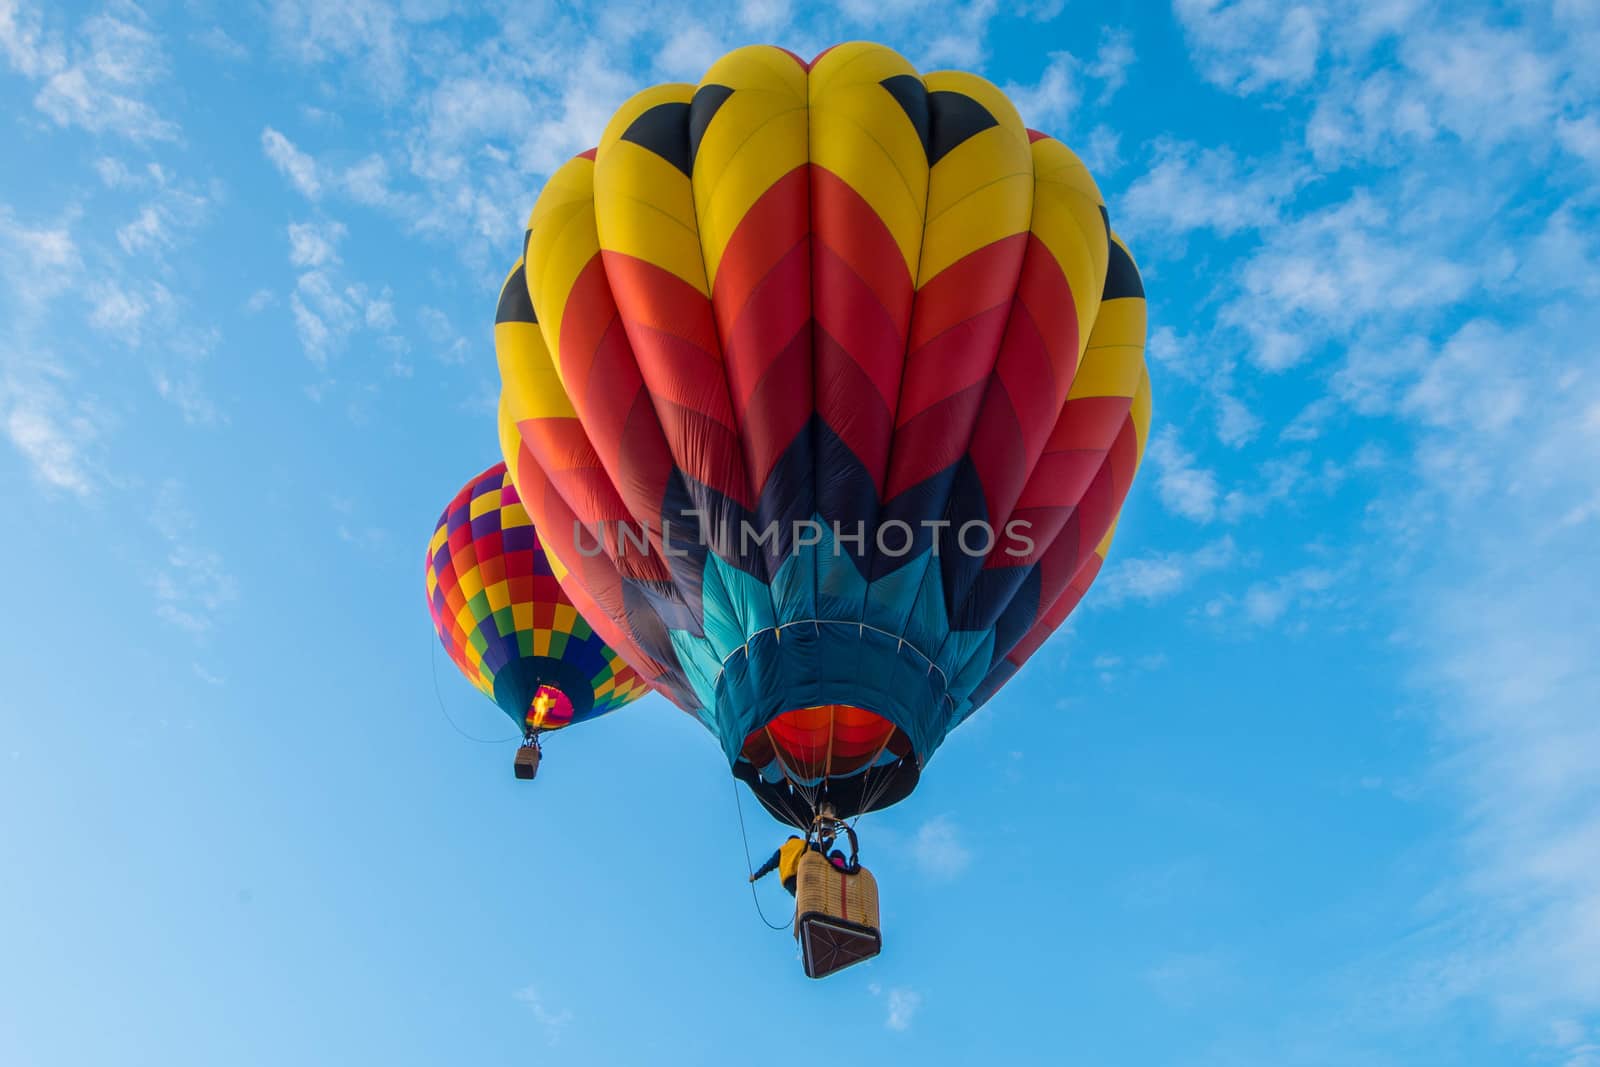 Balloon Balloon Festival 2017 in Eastern Washington by cestes001